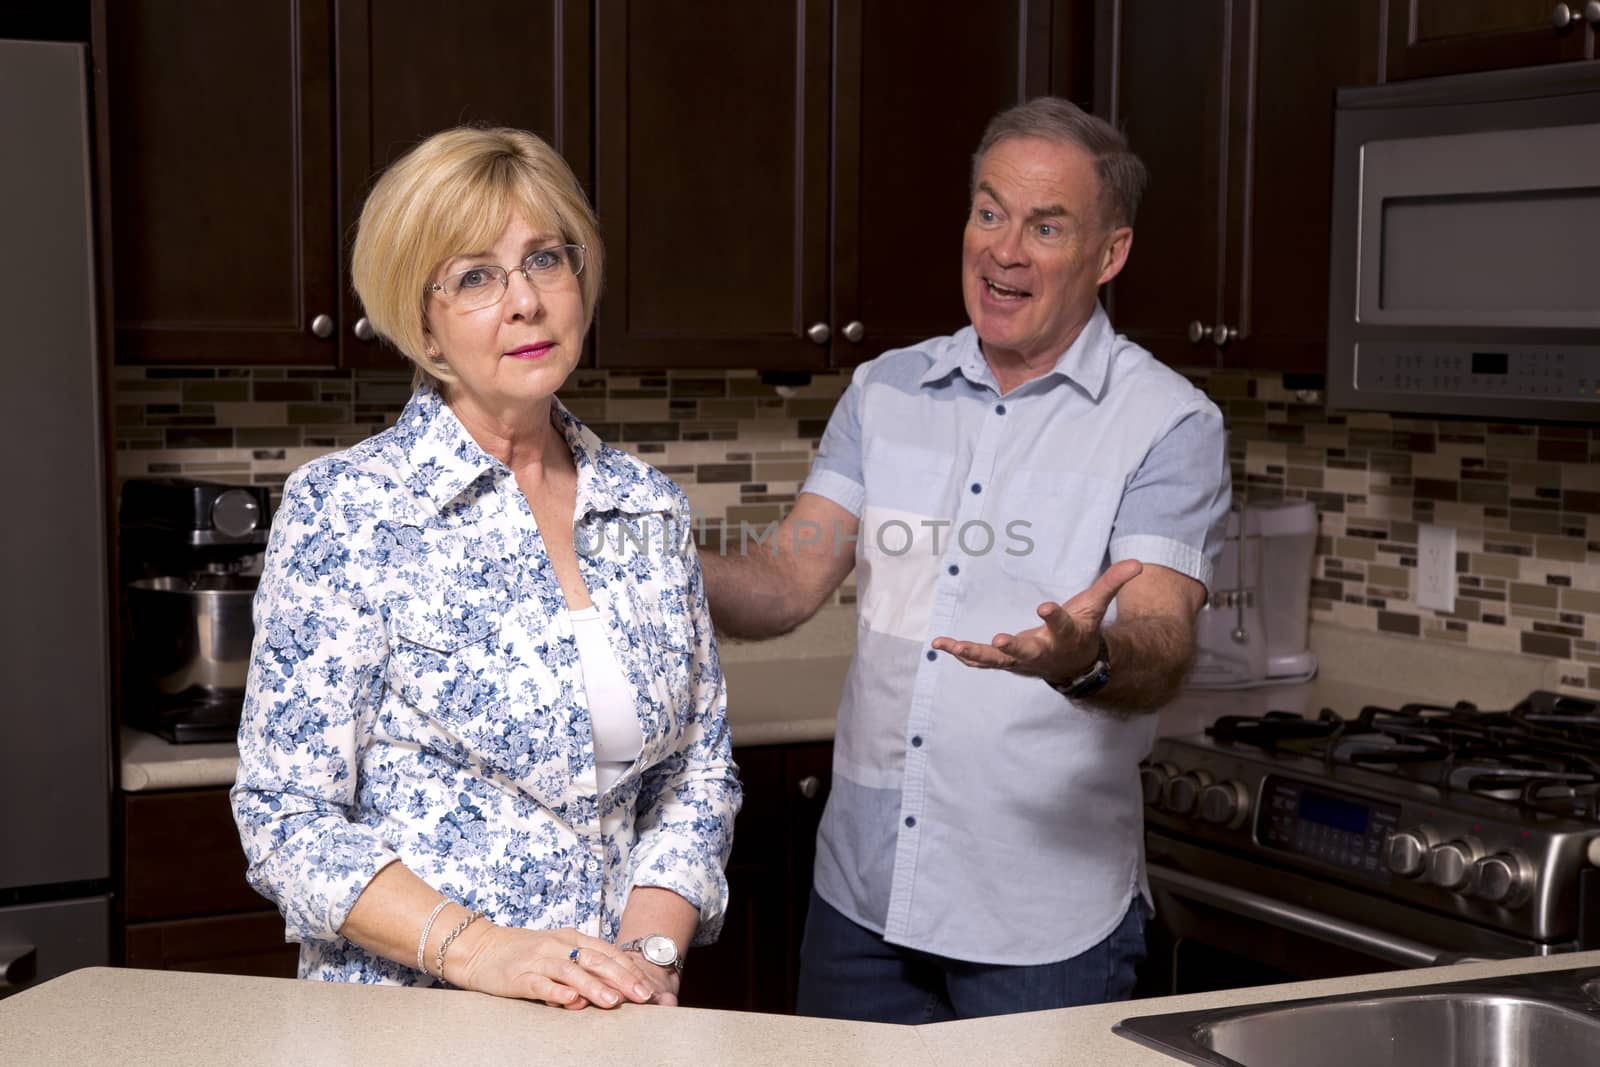 retired couple in the kitchen by zdenkadarula